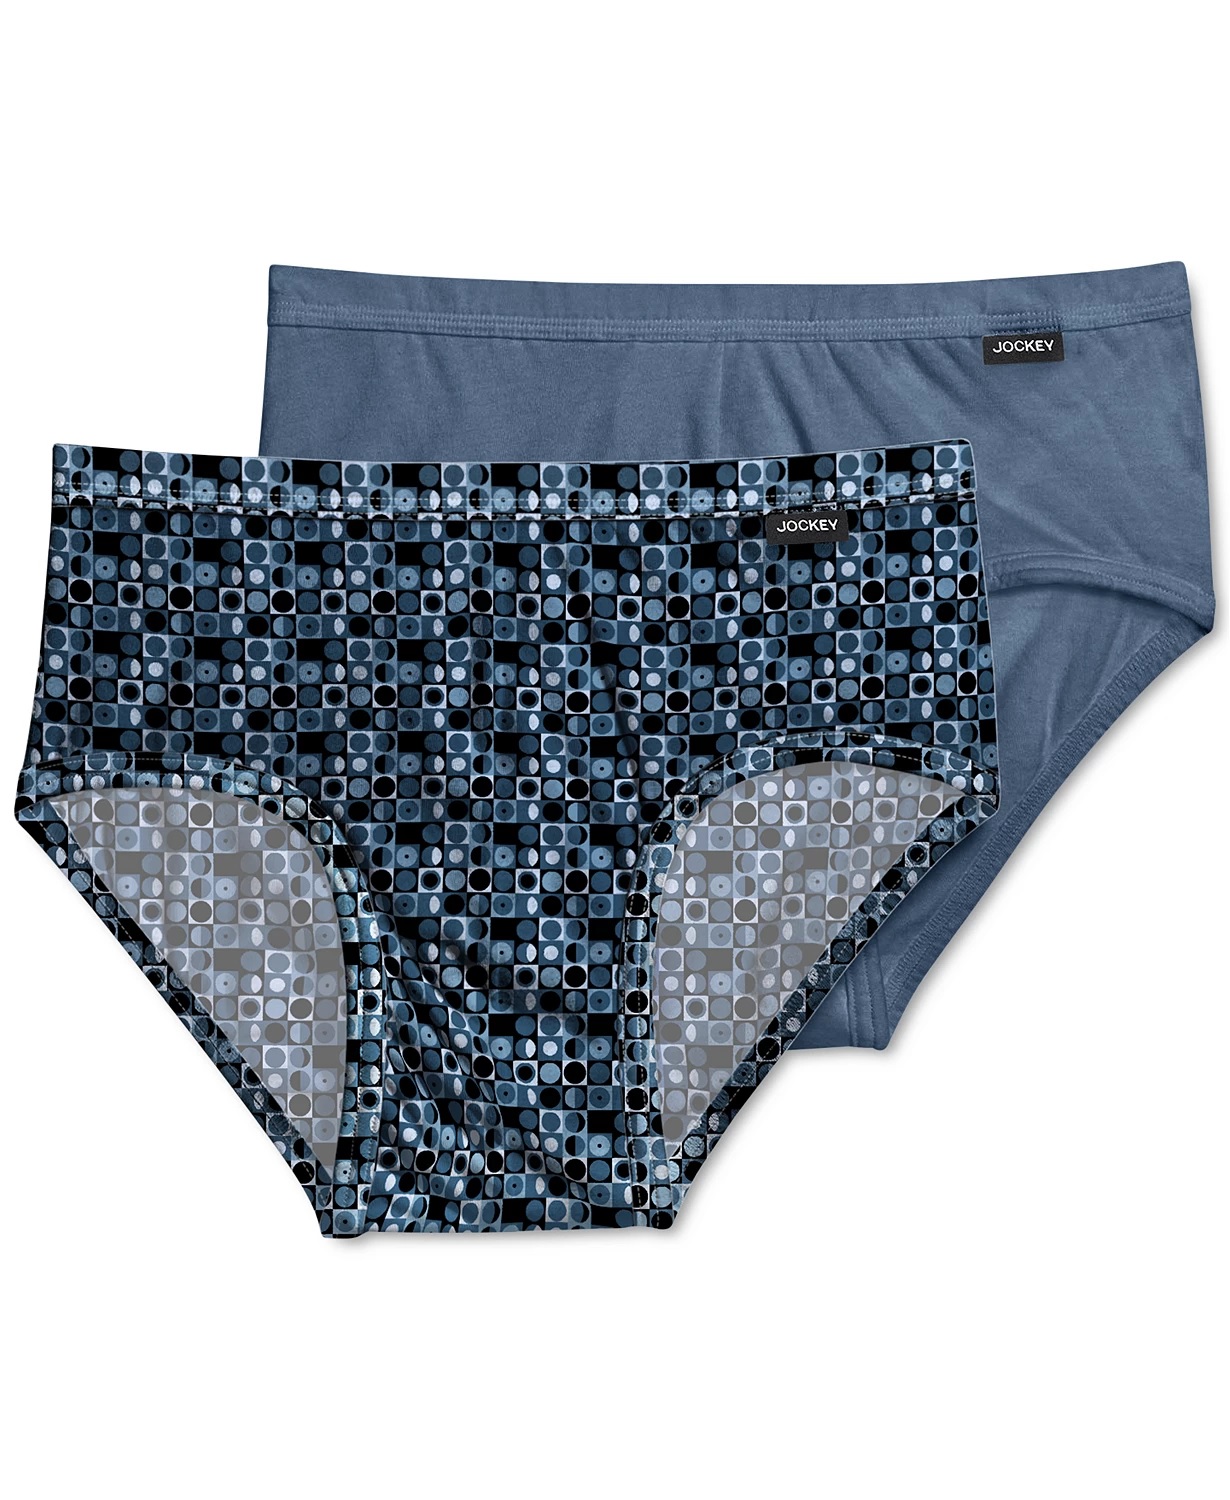 https://damidols.com/wp-content/uploads/2021/10/Jockey-Mens-Underwear-Elance-Poco-Brief-2-Pack-1.jpg